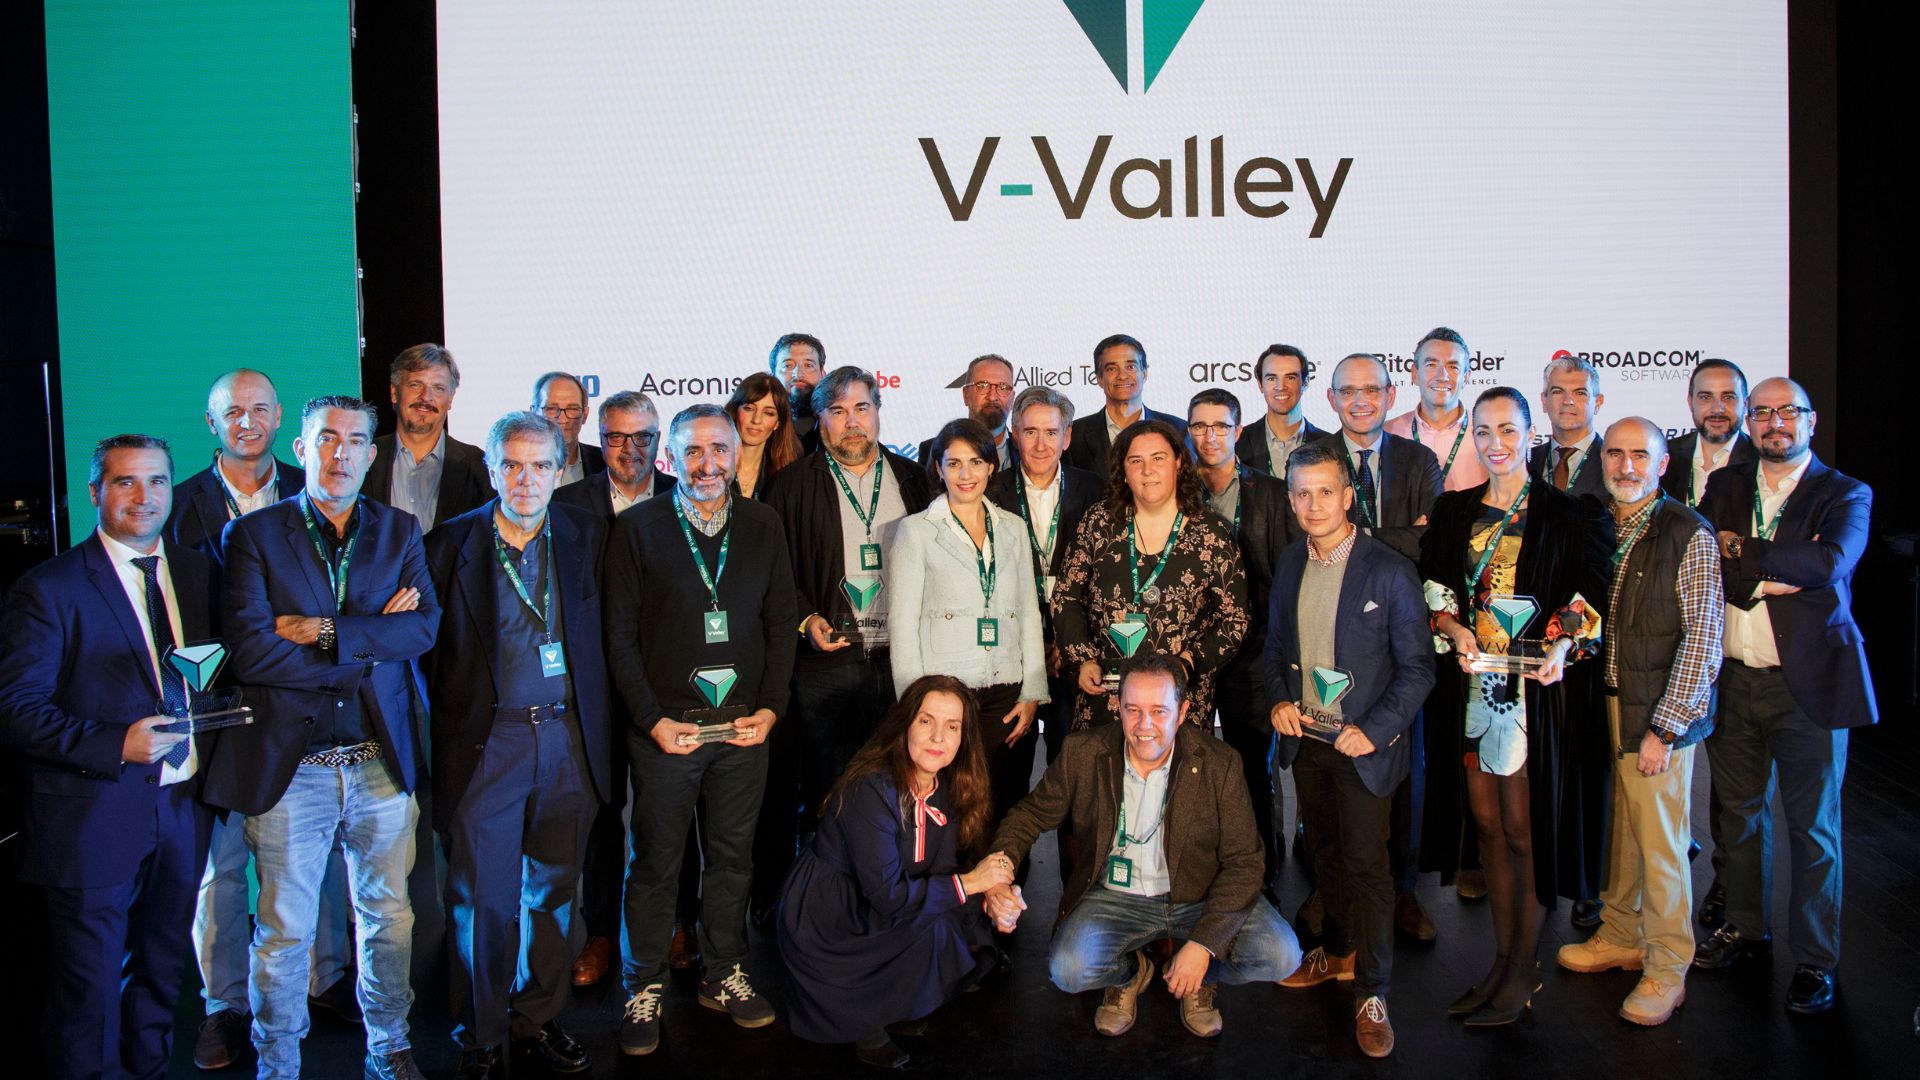 Premios V-Valley